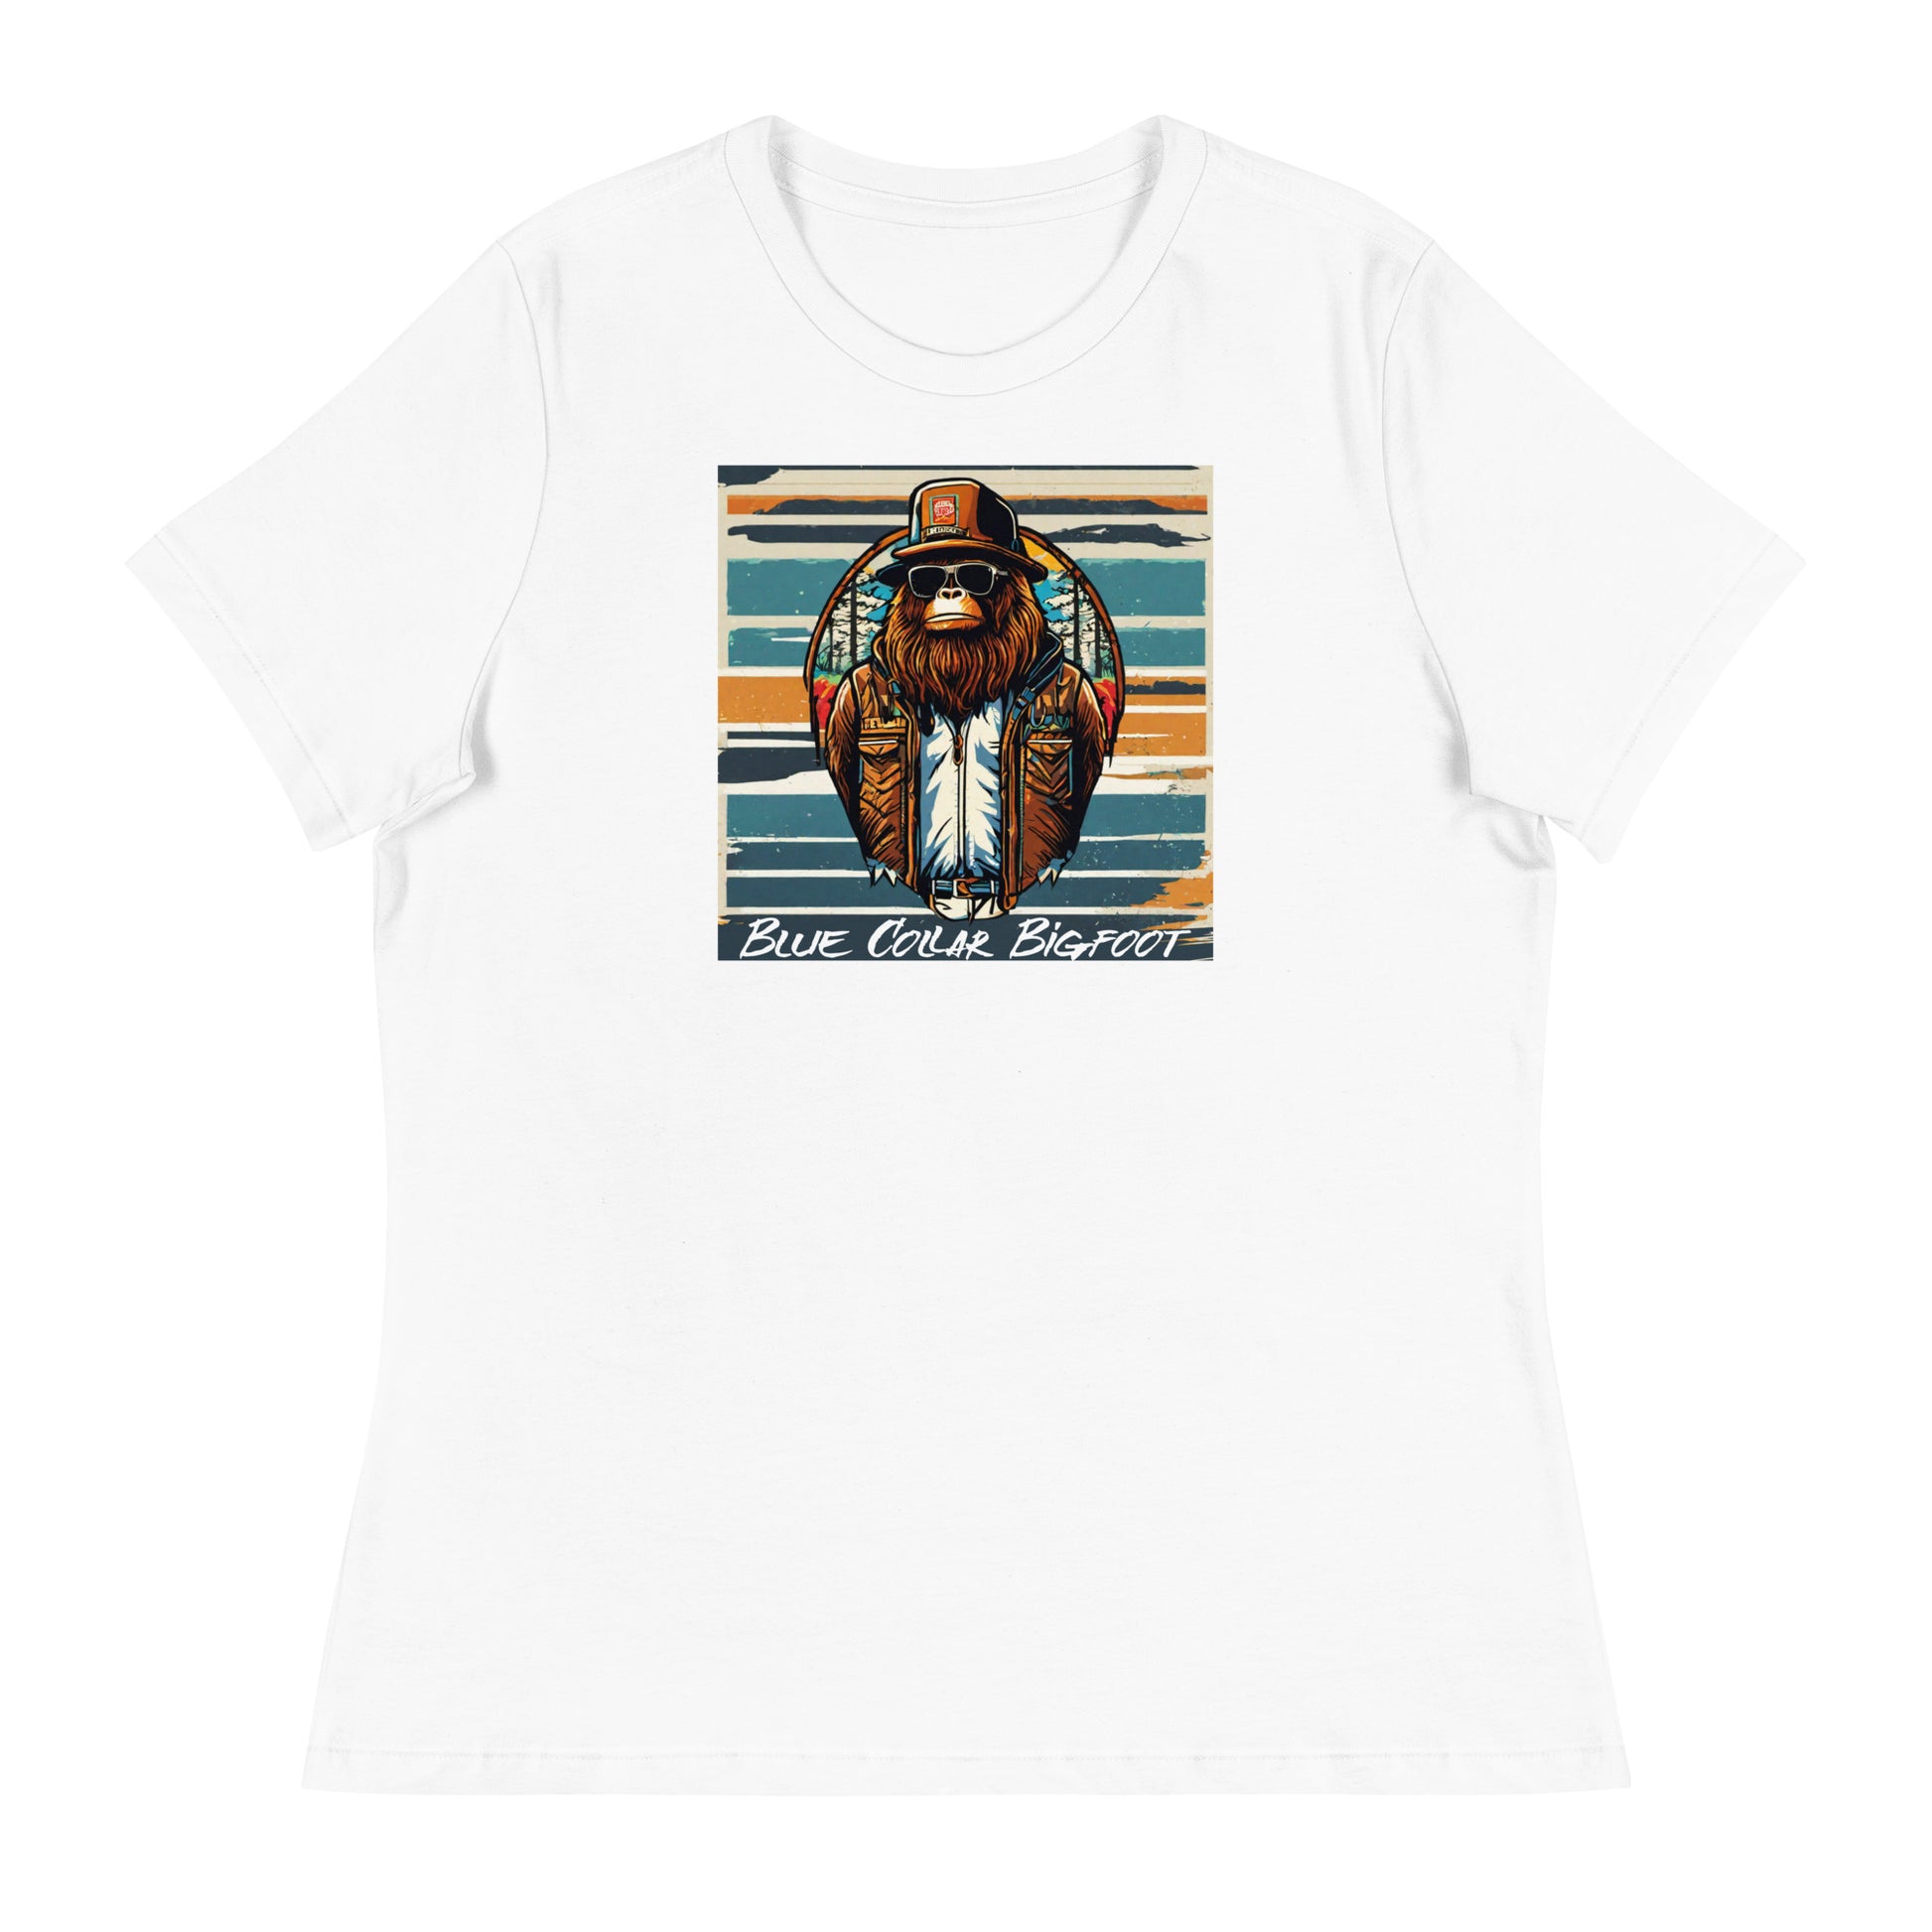 Blue-Collar Bigfoot Women's Graphic T-Shirt White